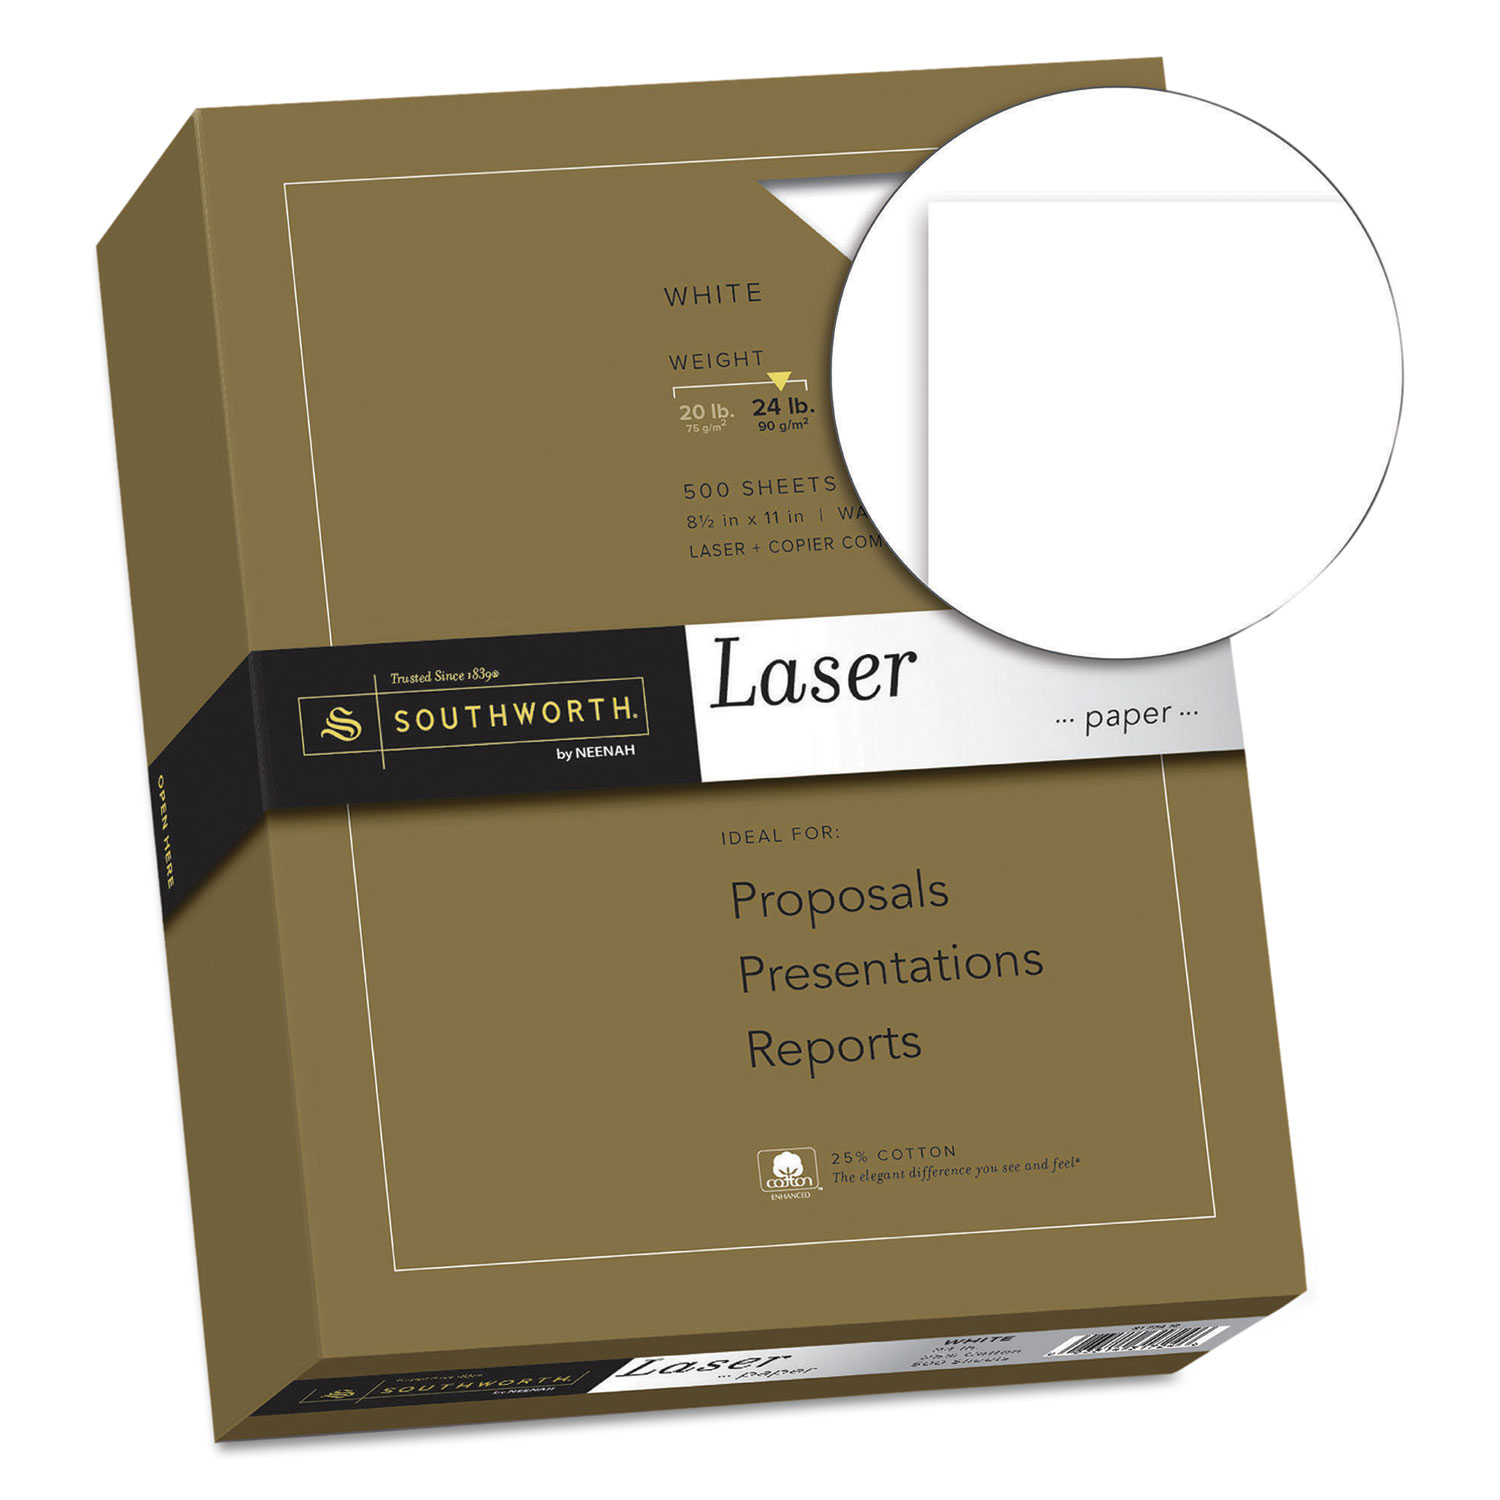 Staples Laser Paper, 25% Cotton, Fine, White, 8.5 x 11